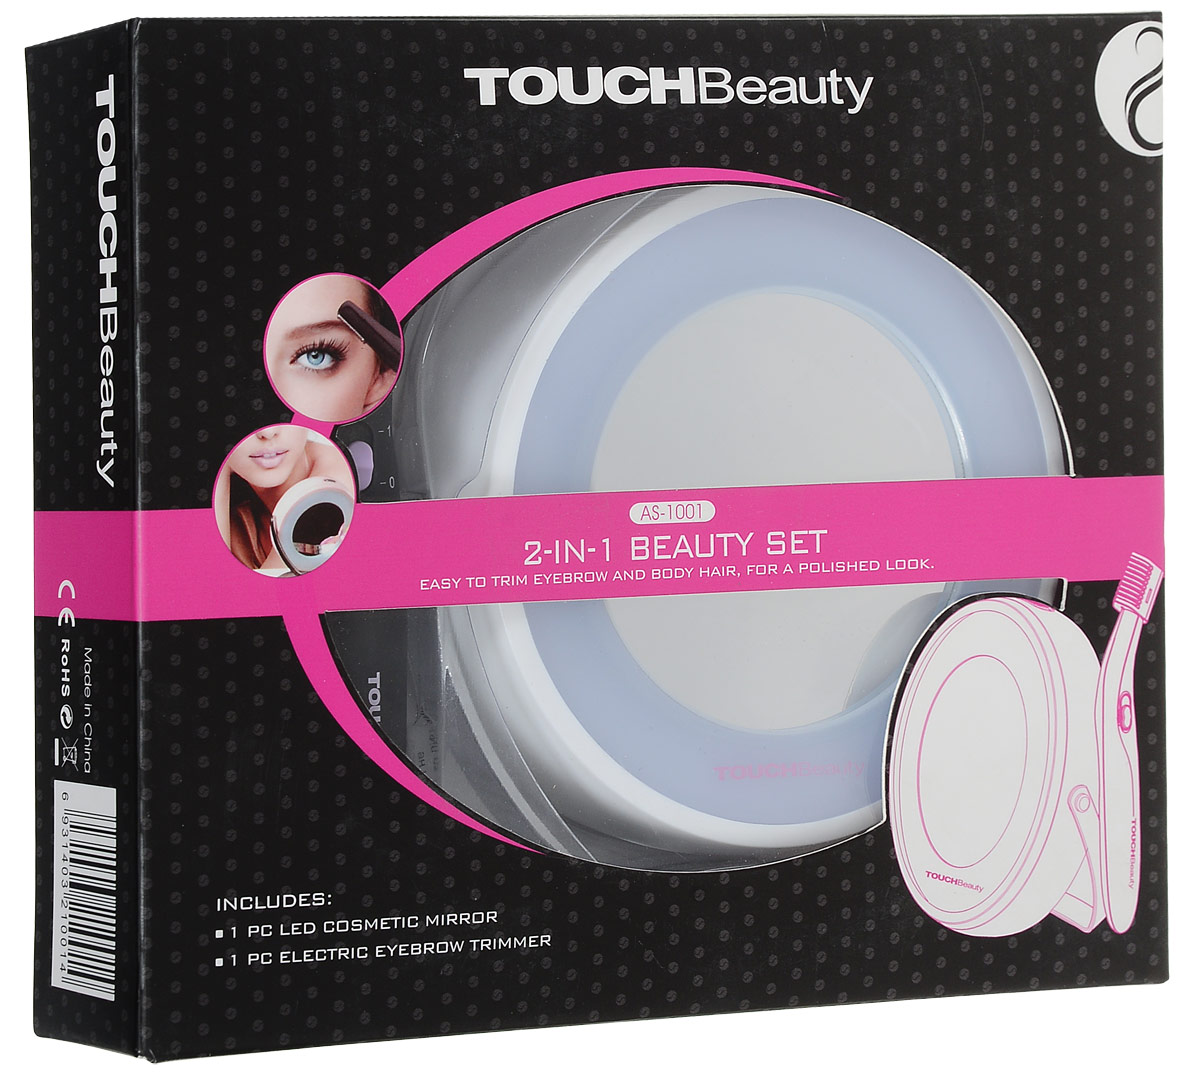   Touchbeauty AS-1001